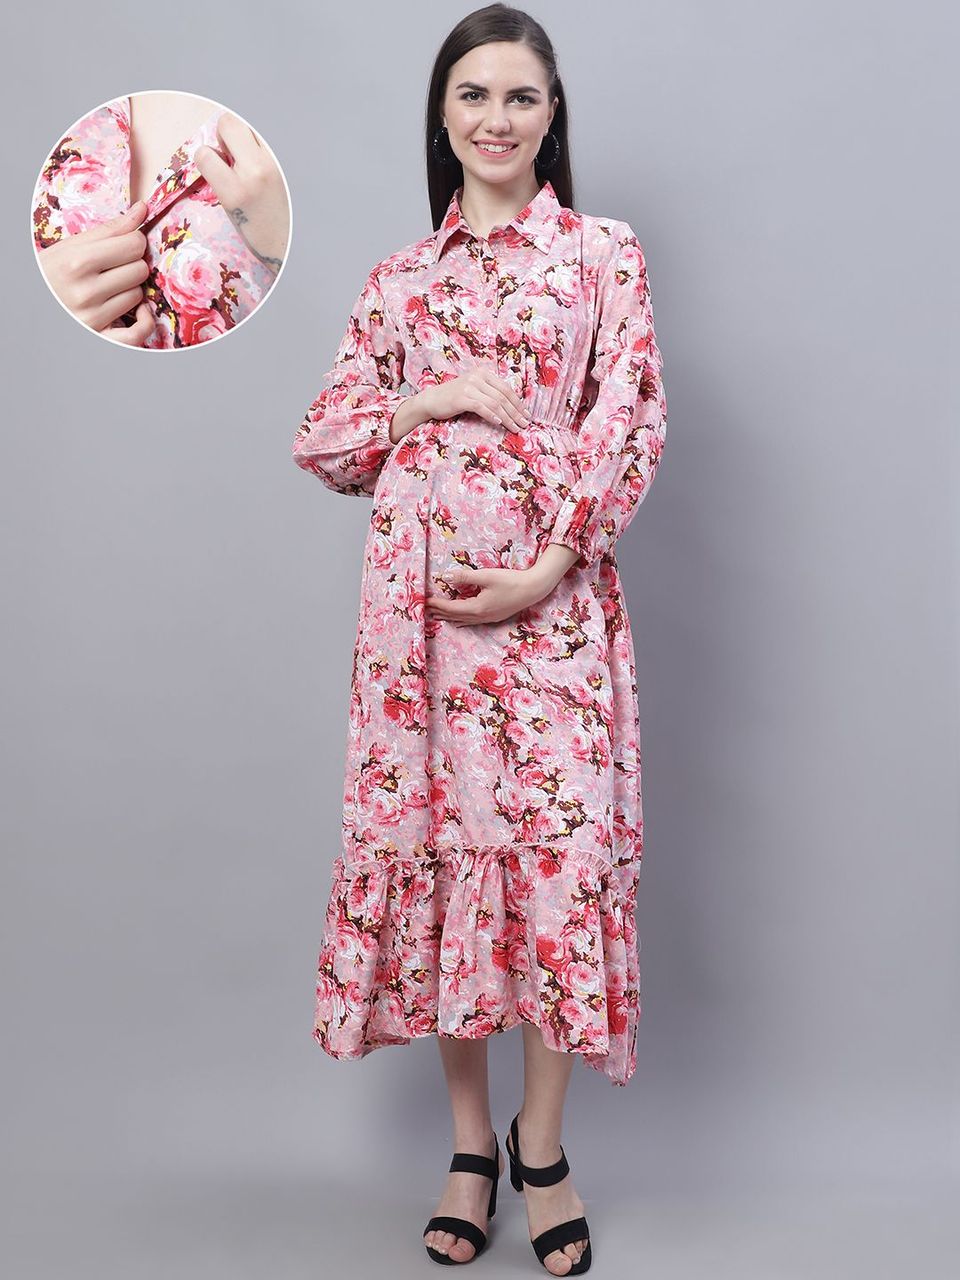 Moms Maternity Women's Maternity Crepe Floral Print Pink Midi Dress